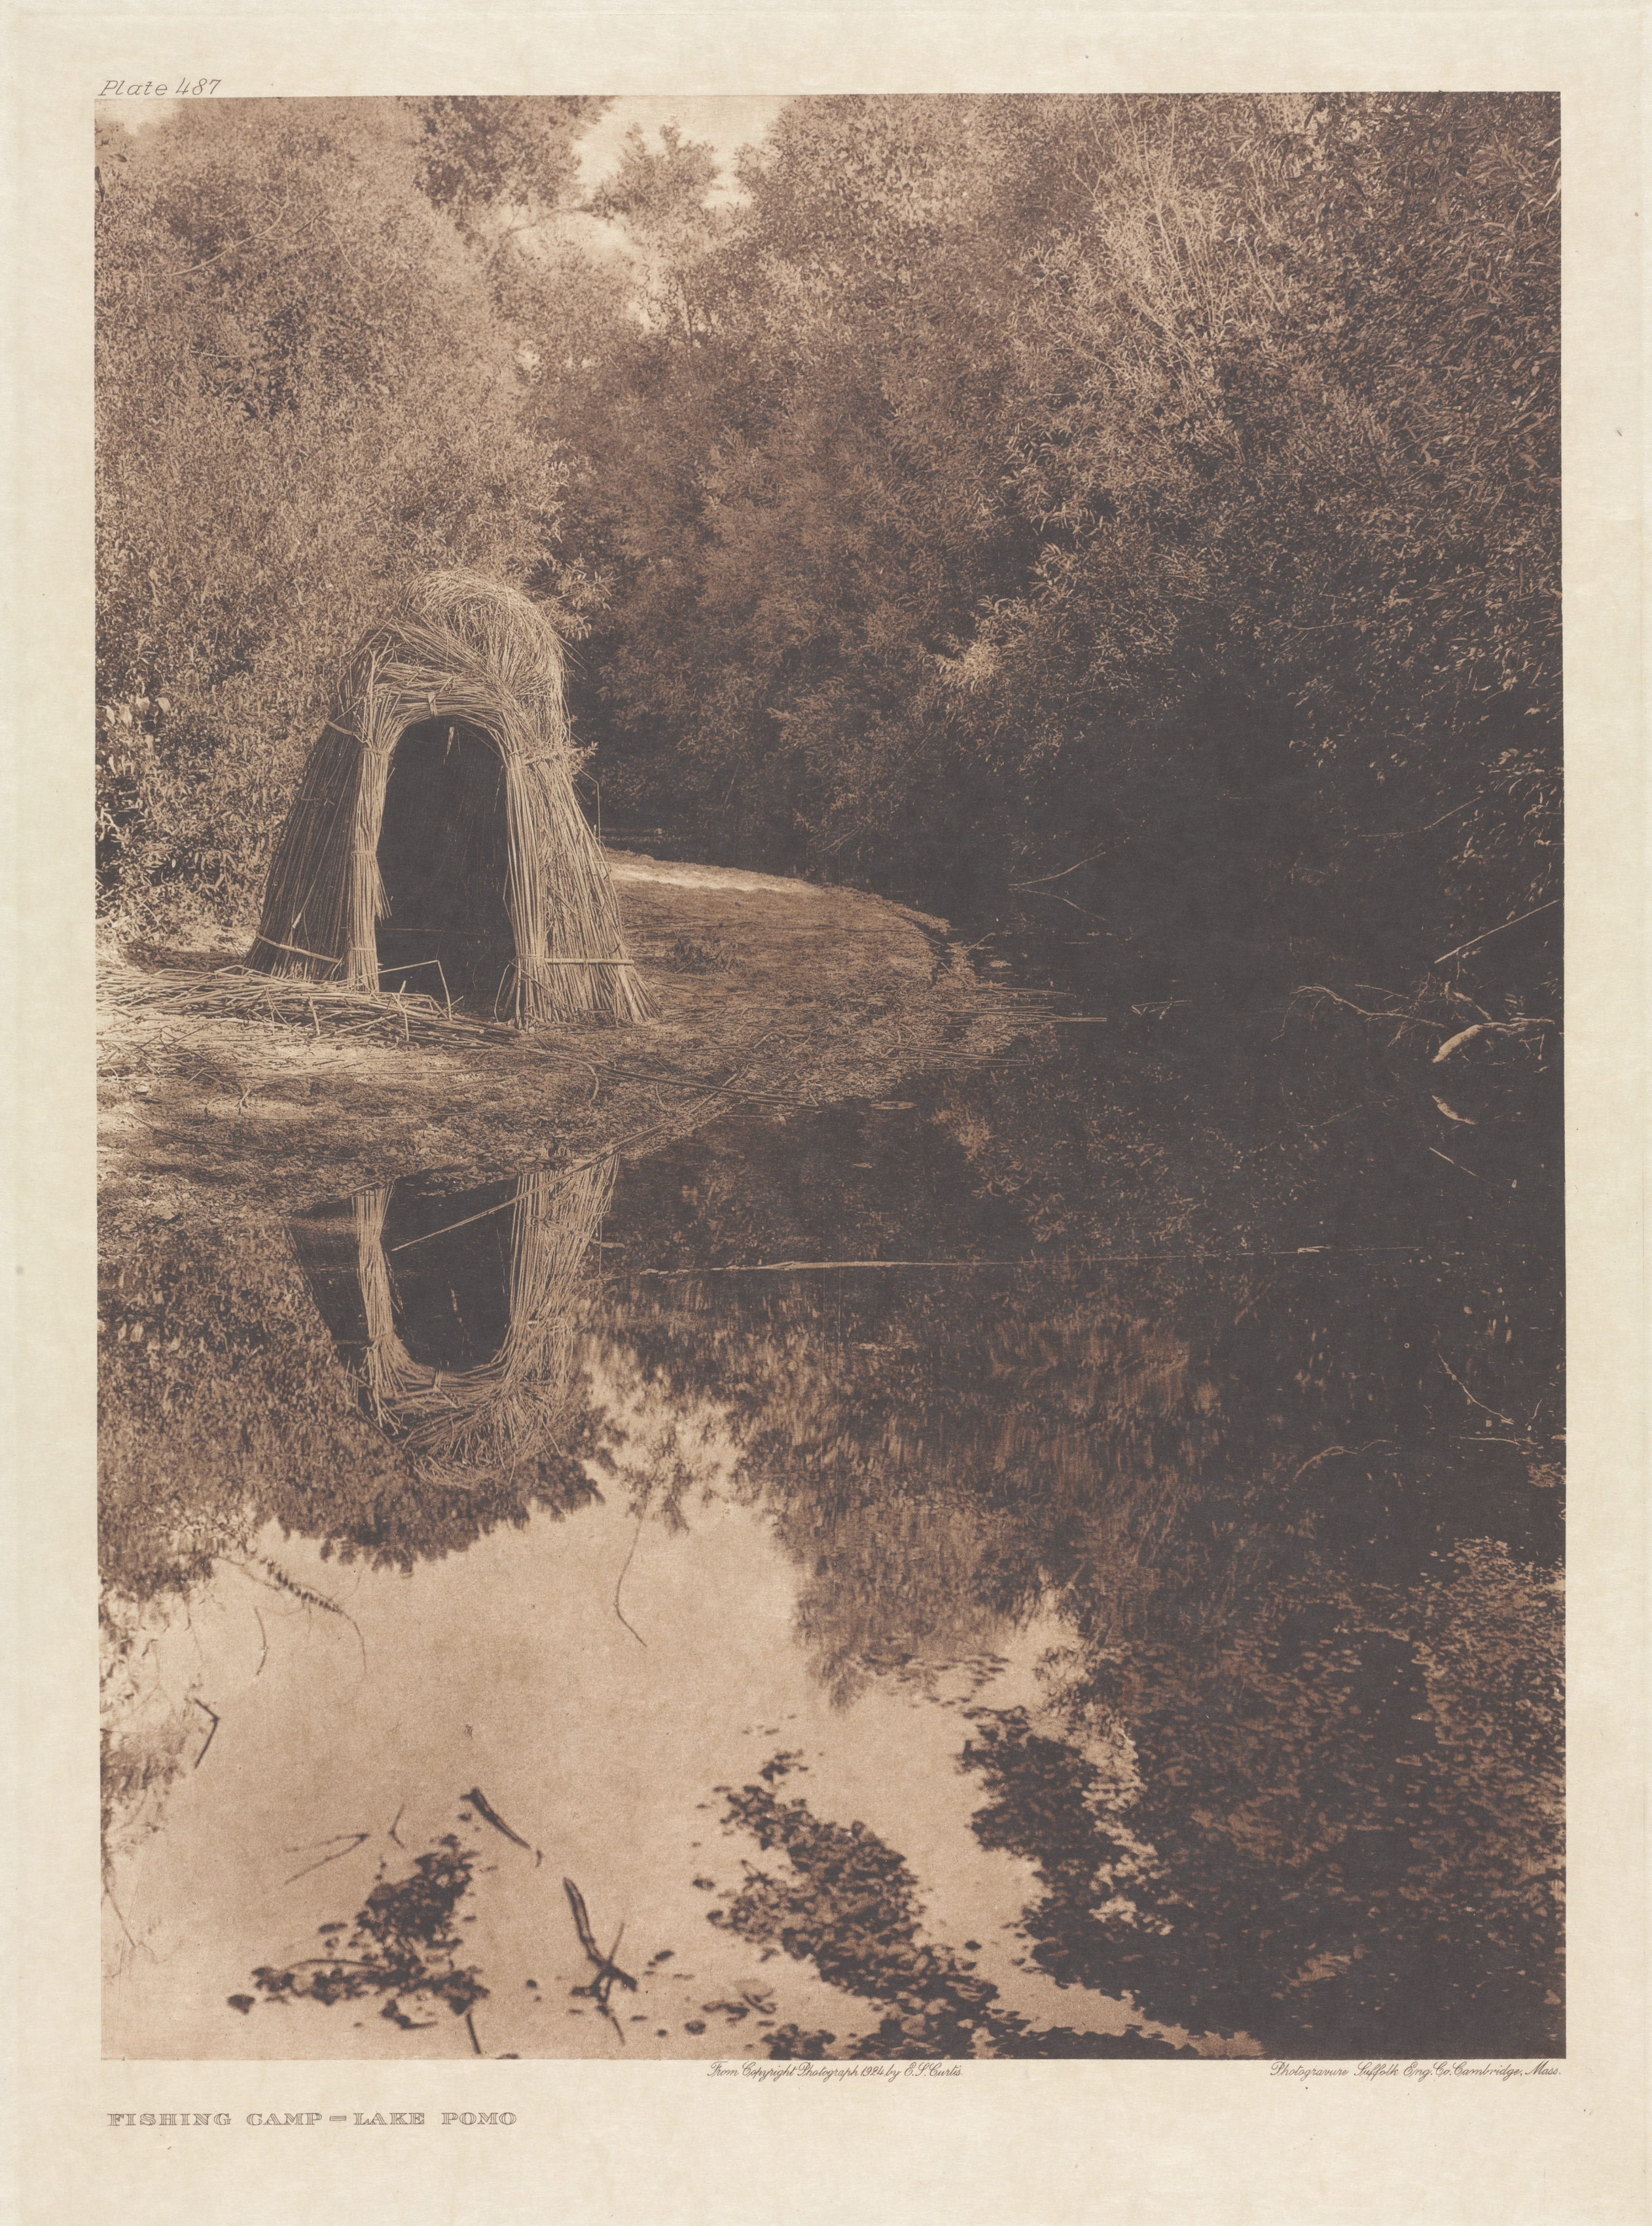 Portfolio XIV, Plate 487: Fishing Camp - Lake Pomo